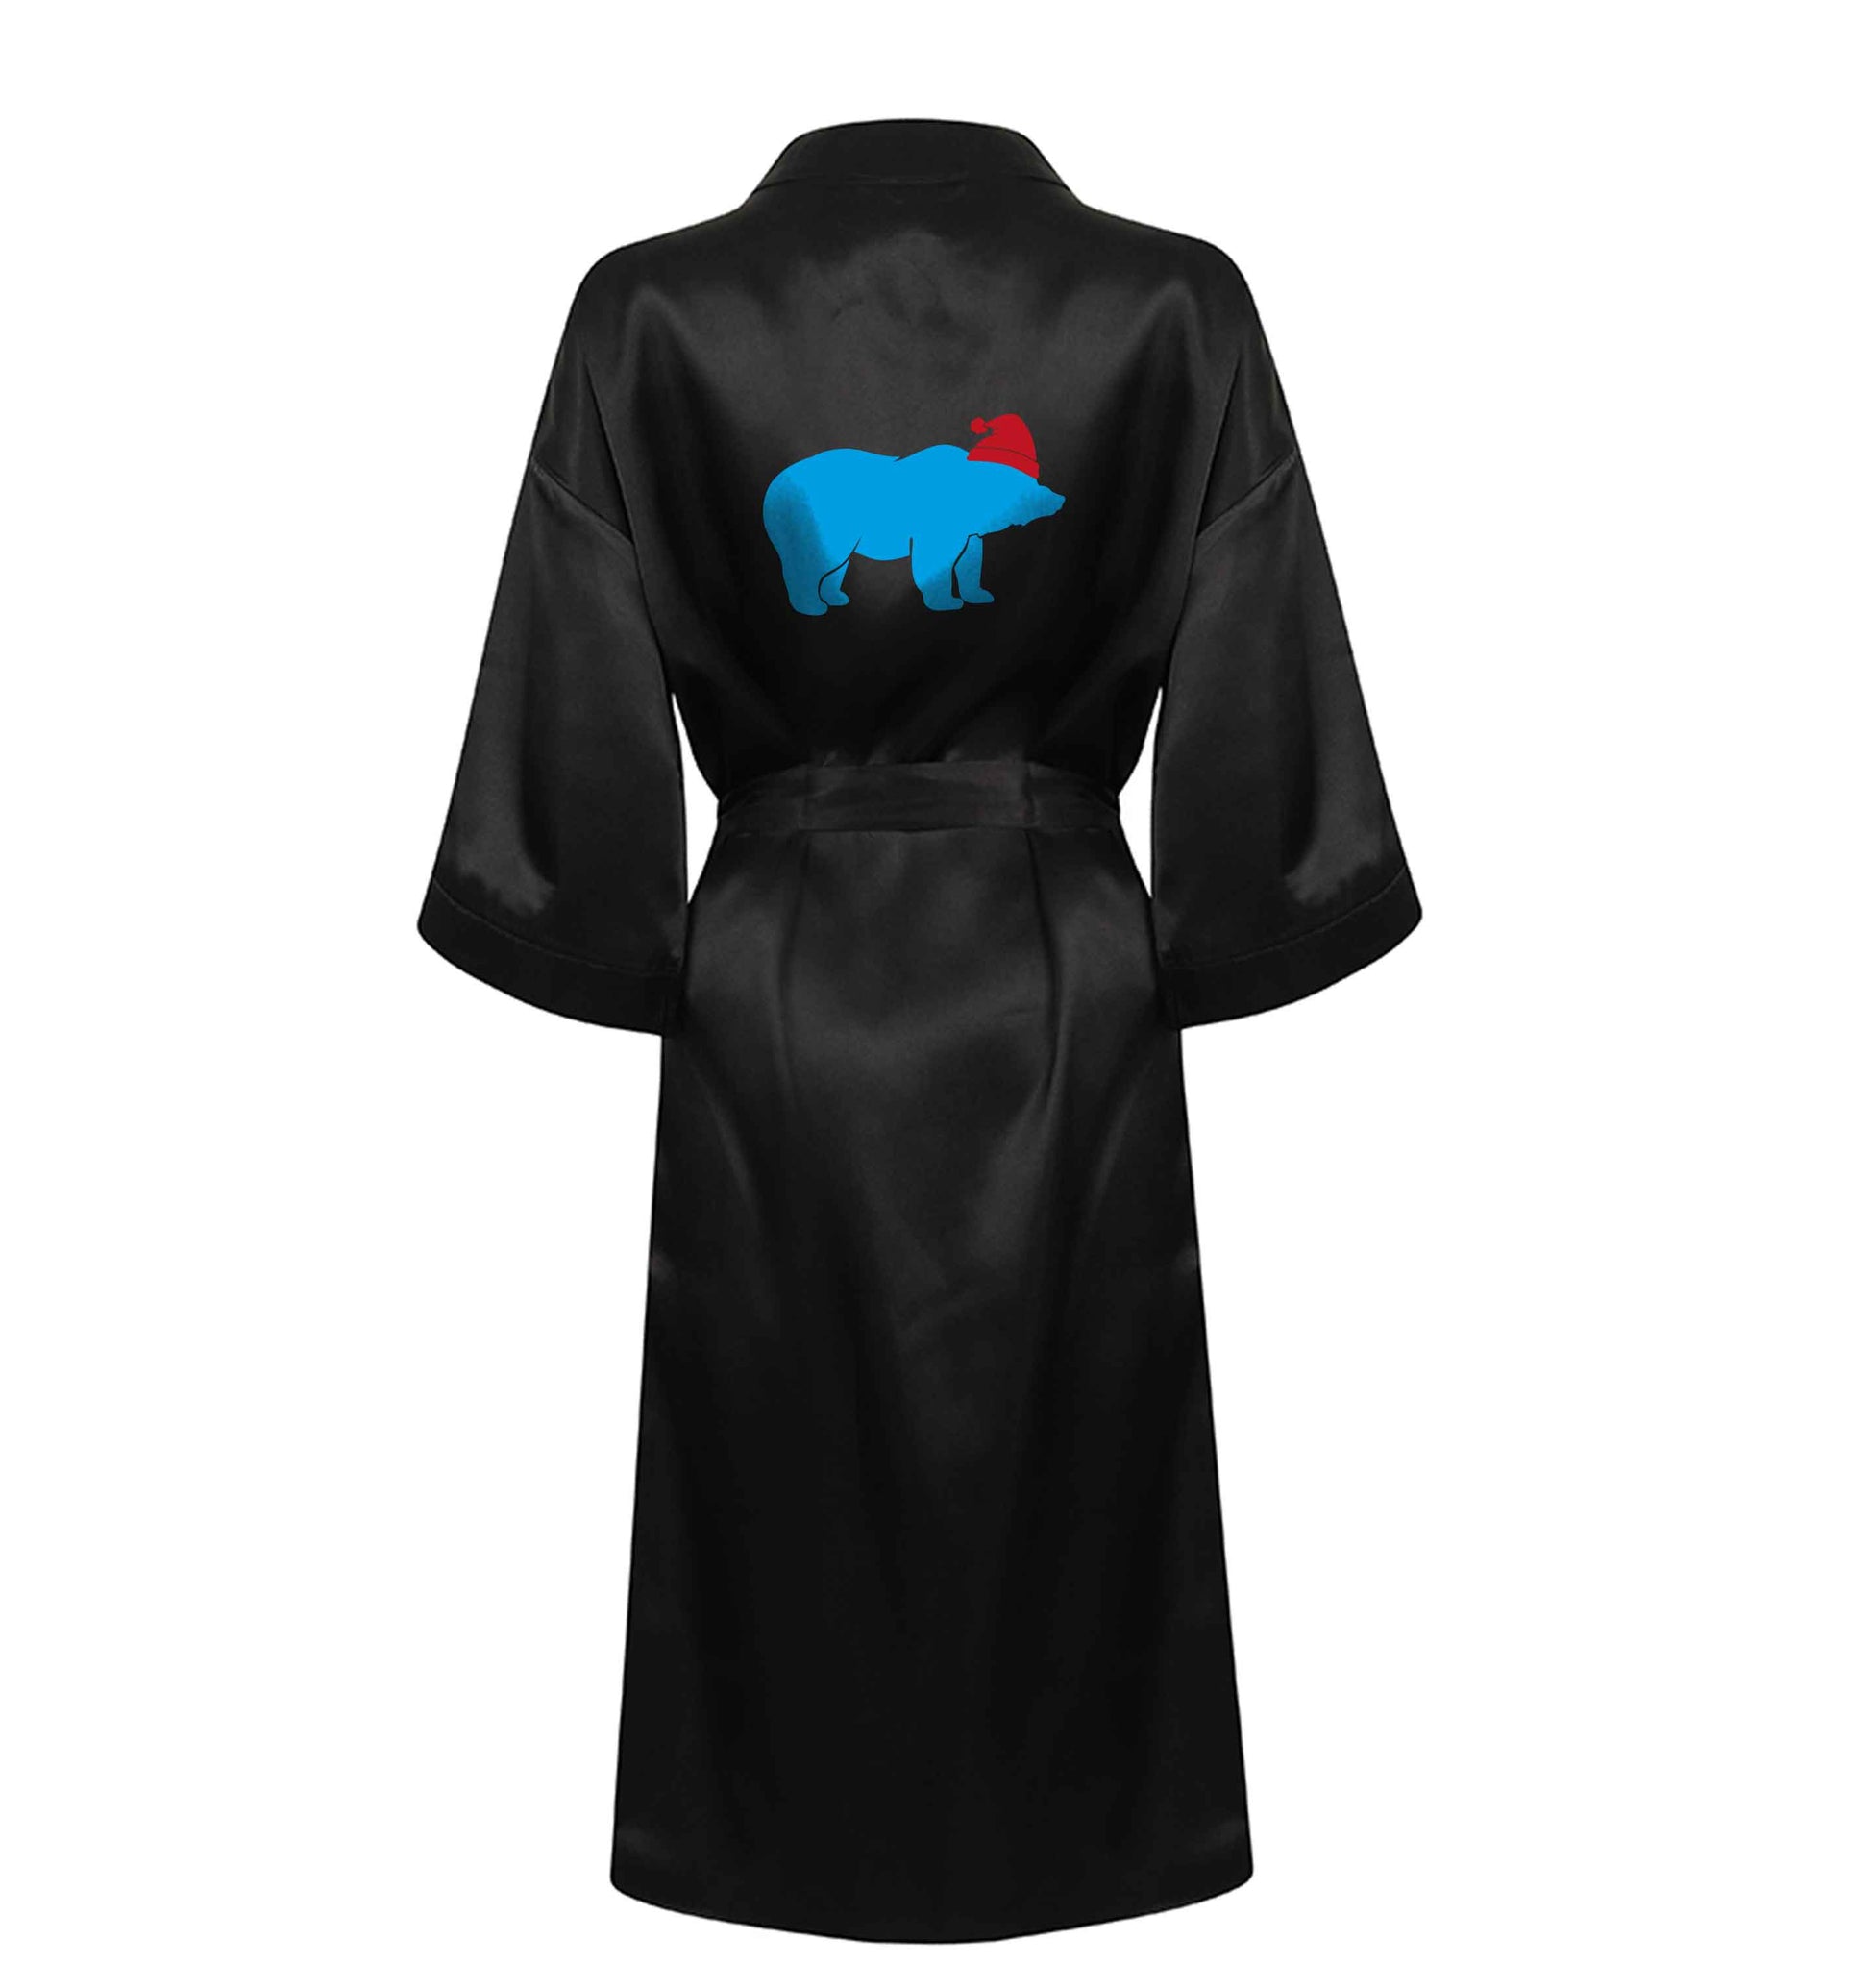 Blue bear Santa XL/XXL black ladies dressing gown size 16/18